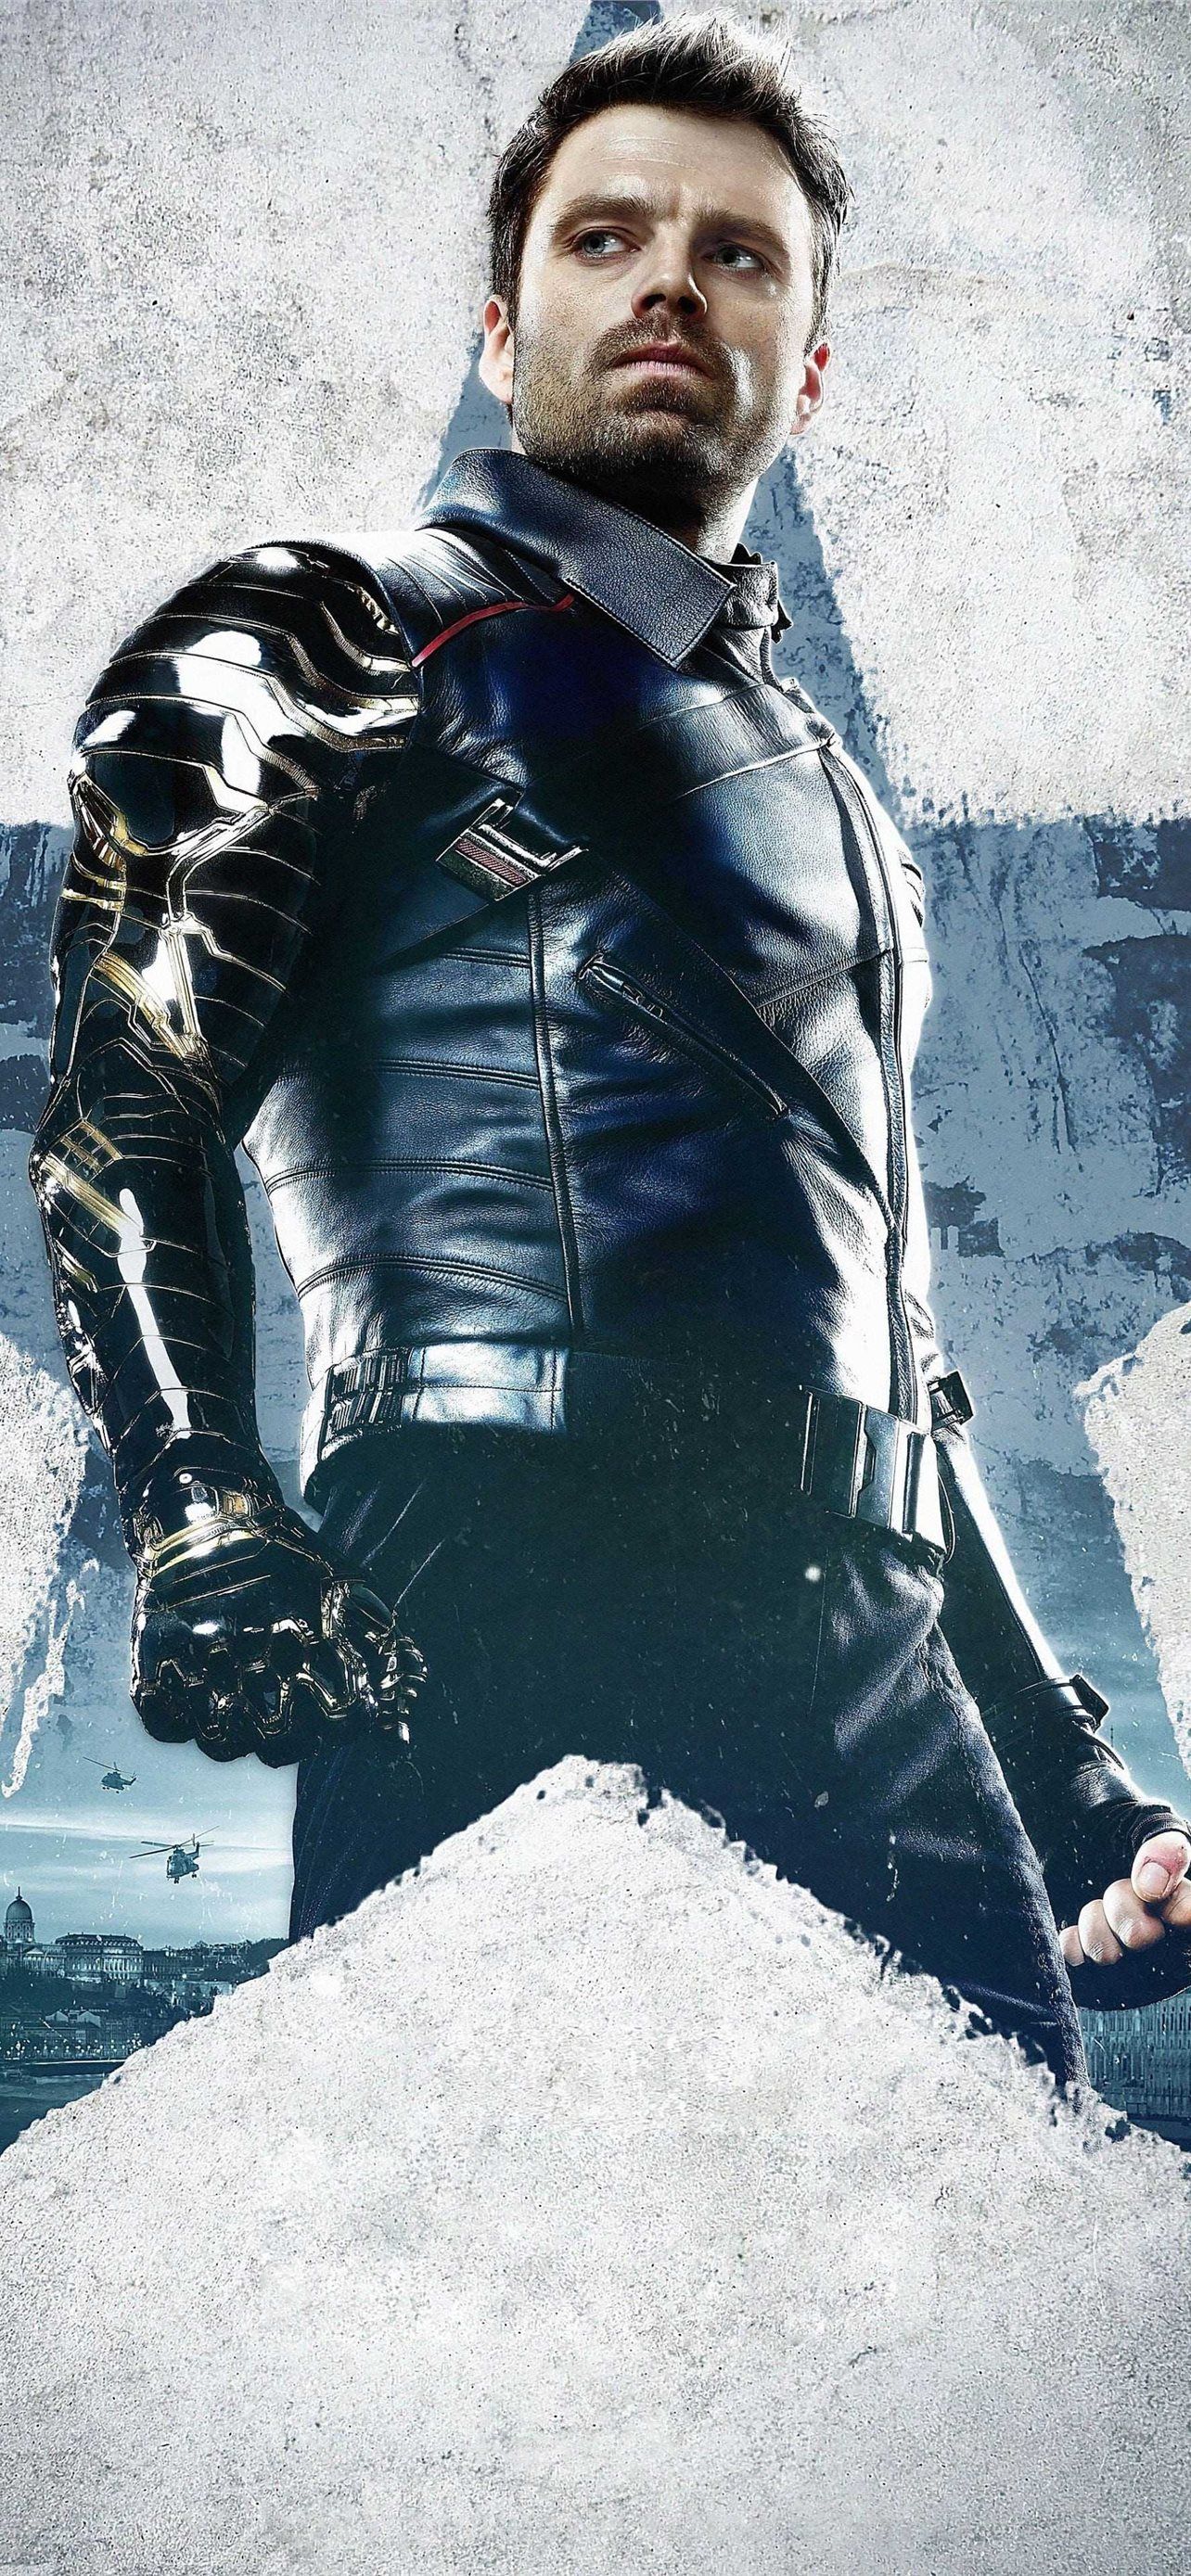 Sebastian Stan as the Winter Soldier in a black leather jacket - Bucky Barnes